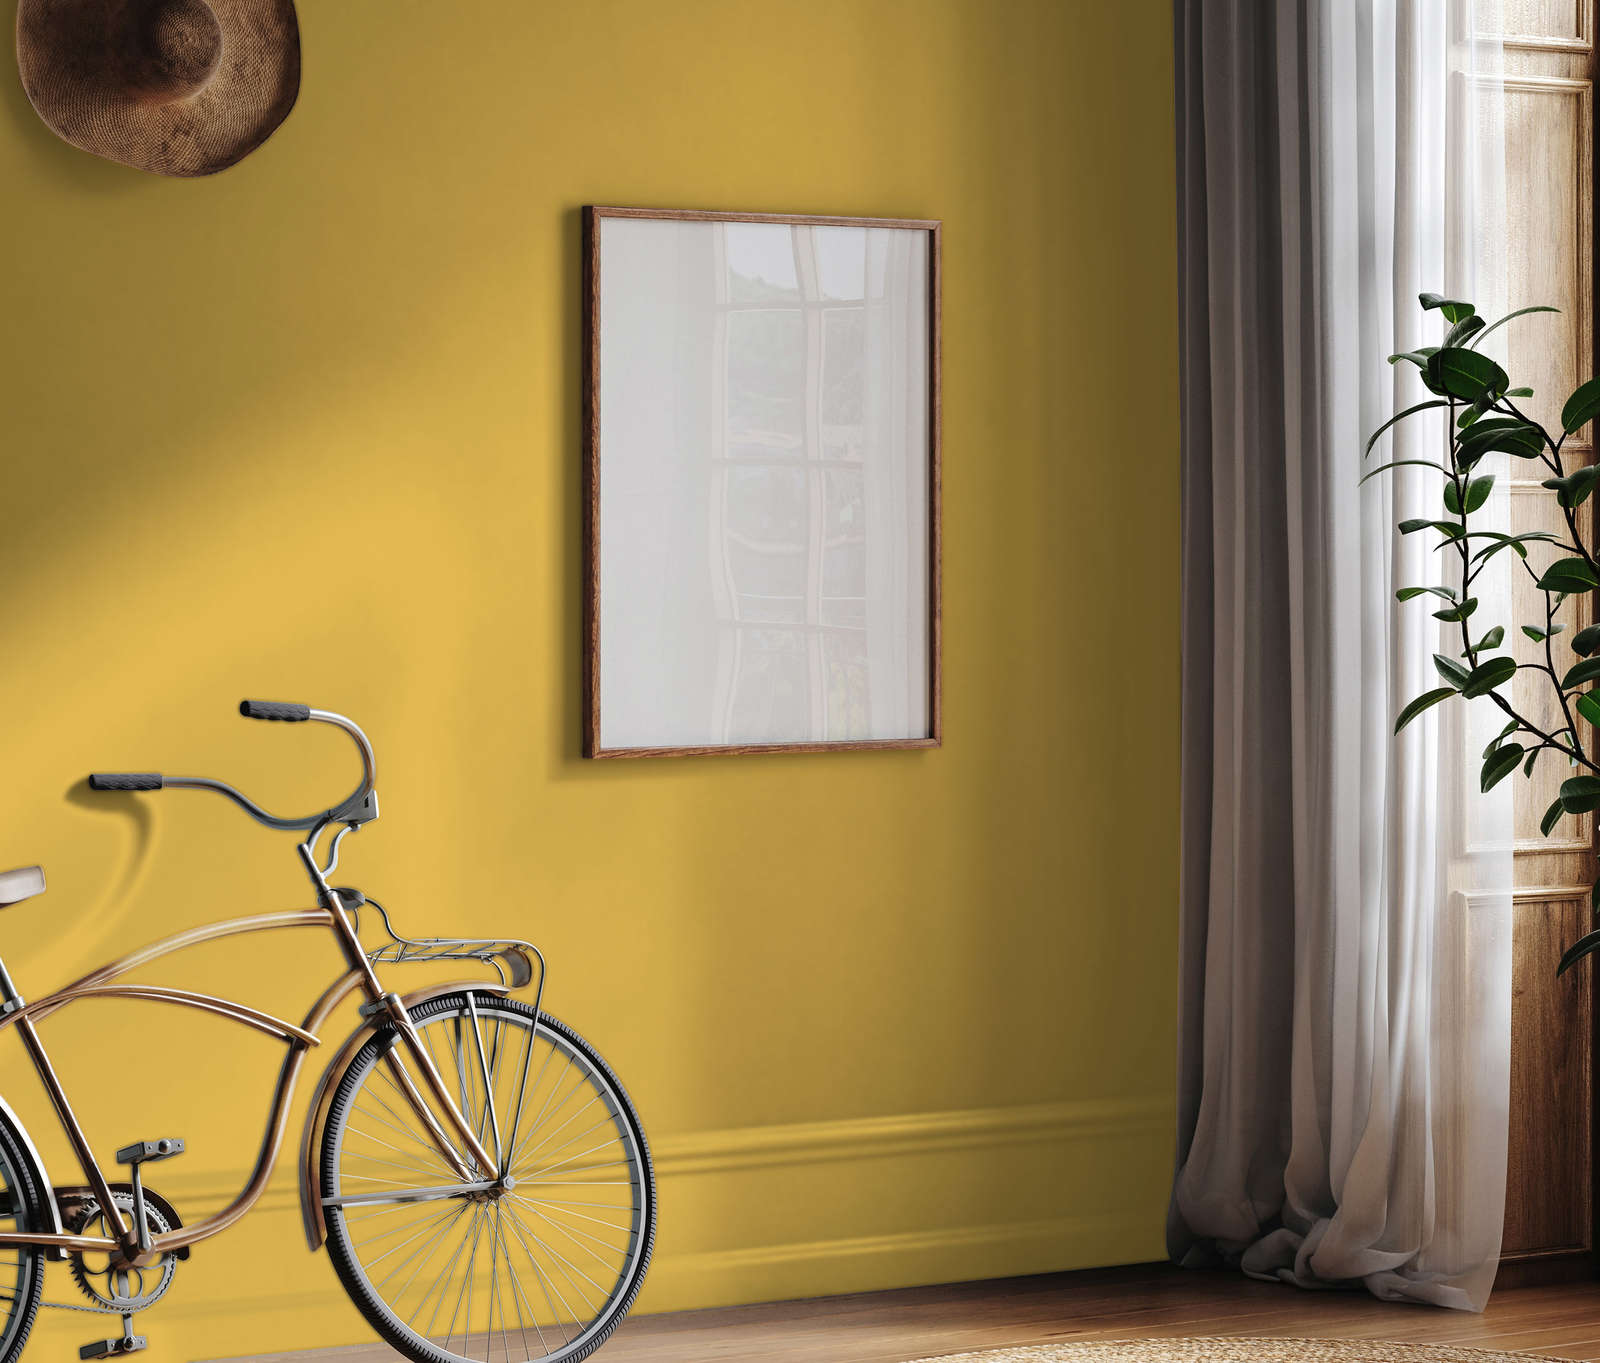             Premium Wall Paint Active Vanilla »Juicy Yellow« NW803 – 1 litre
        